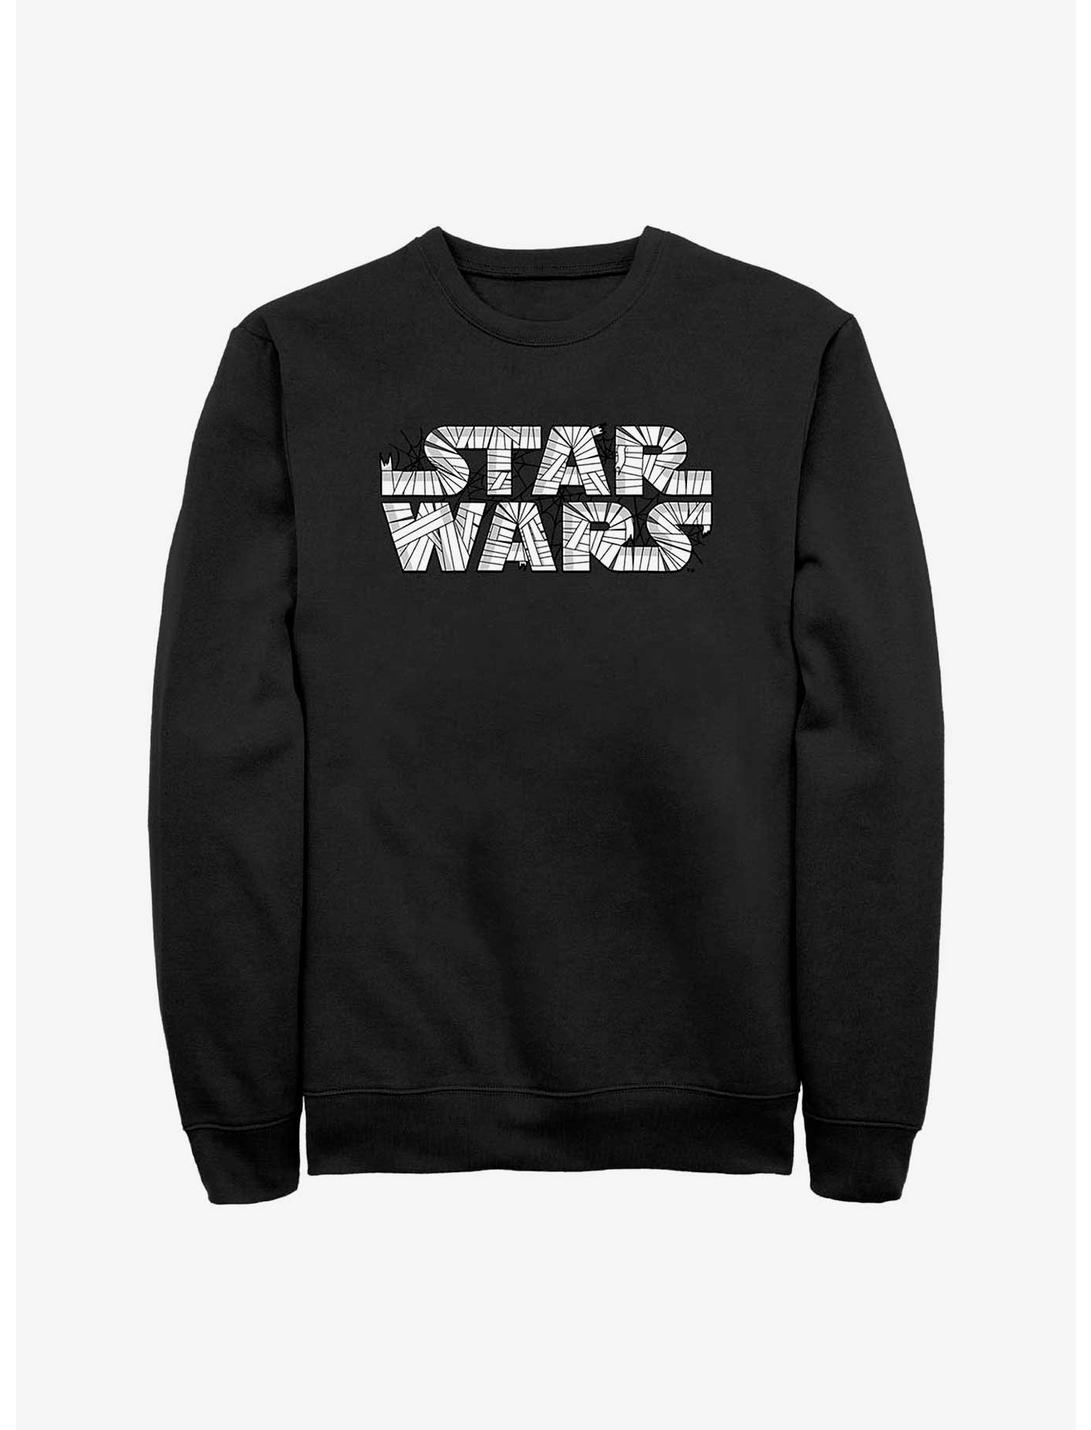 Star Wars Wrap Star Sweatshirt, BLACK, hi-res